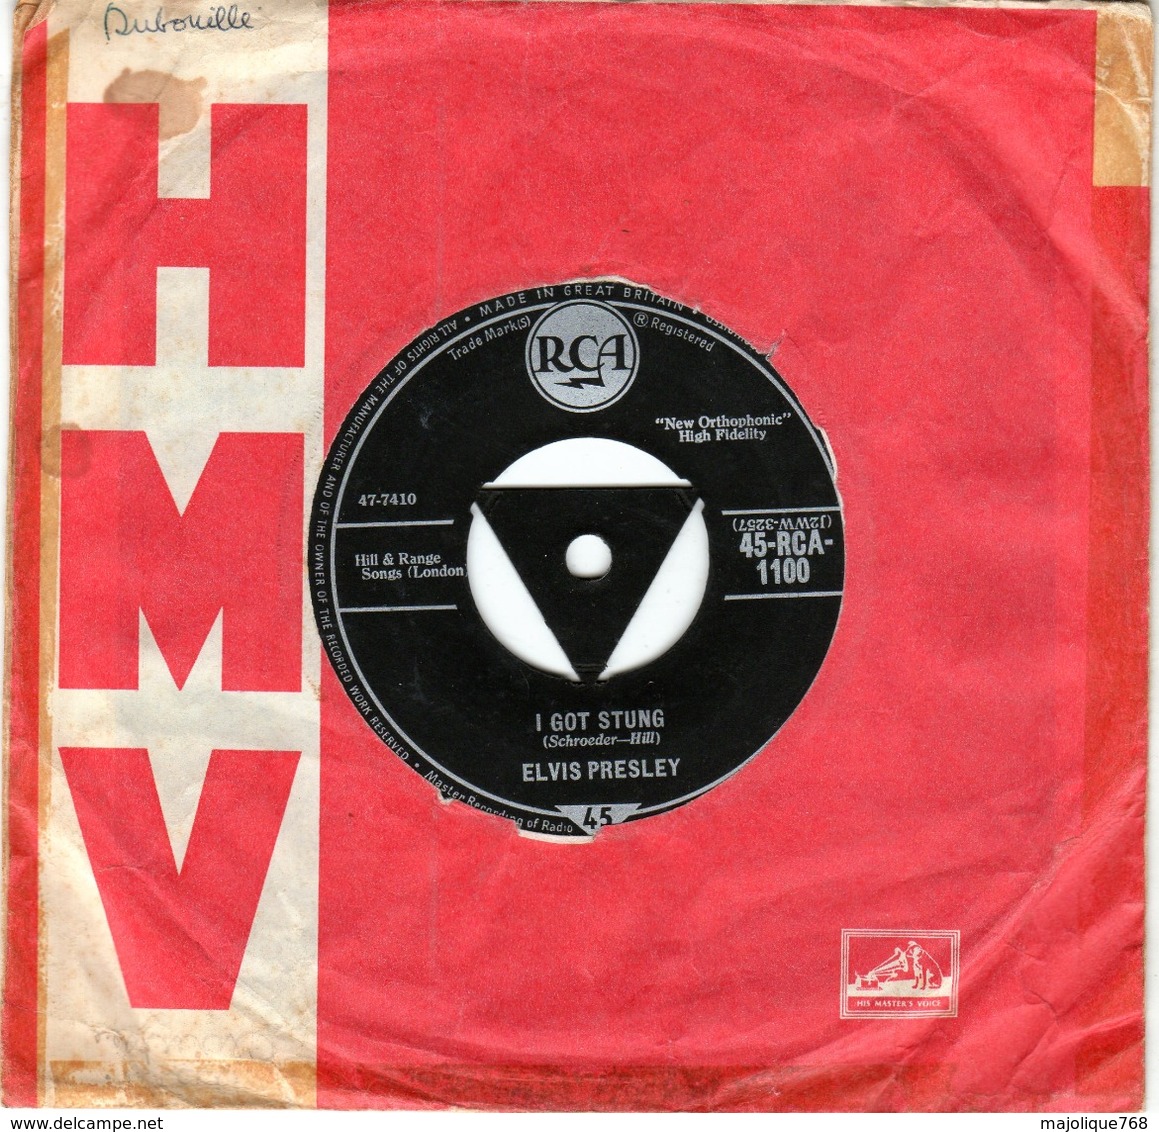 Elvis Presley - On Night - I Got Stung - 45-RCA-1100 - 1959 - - Rock